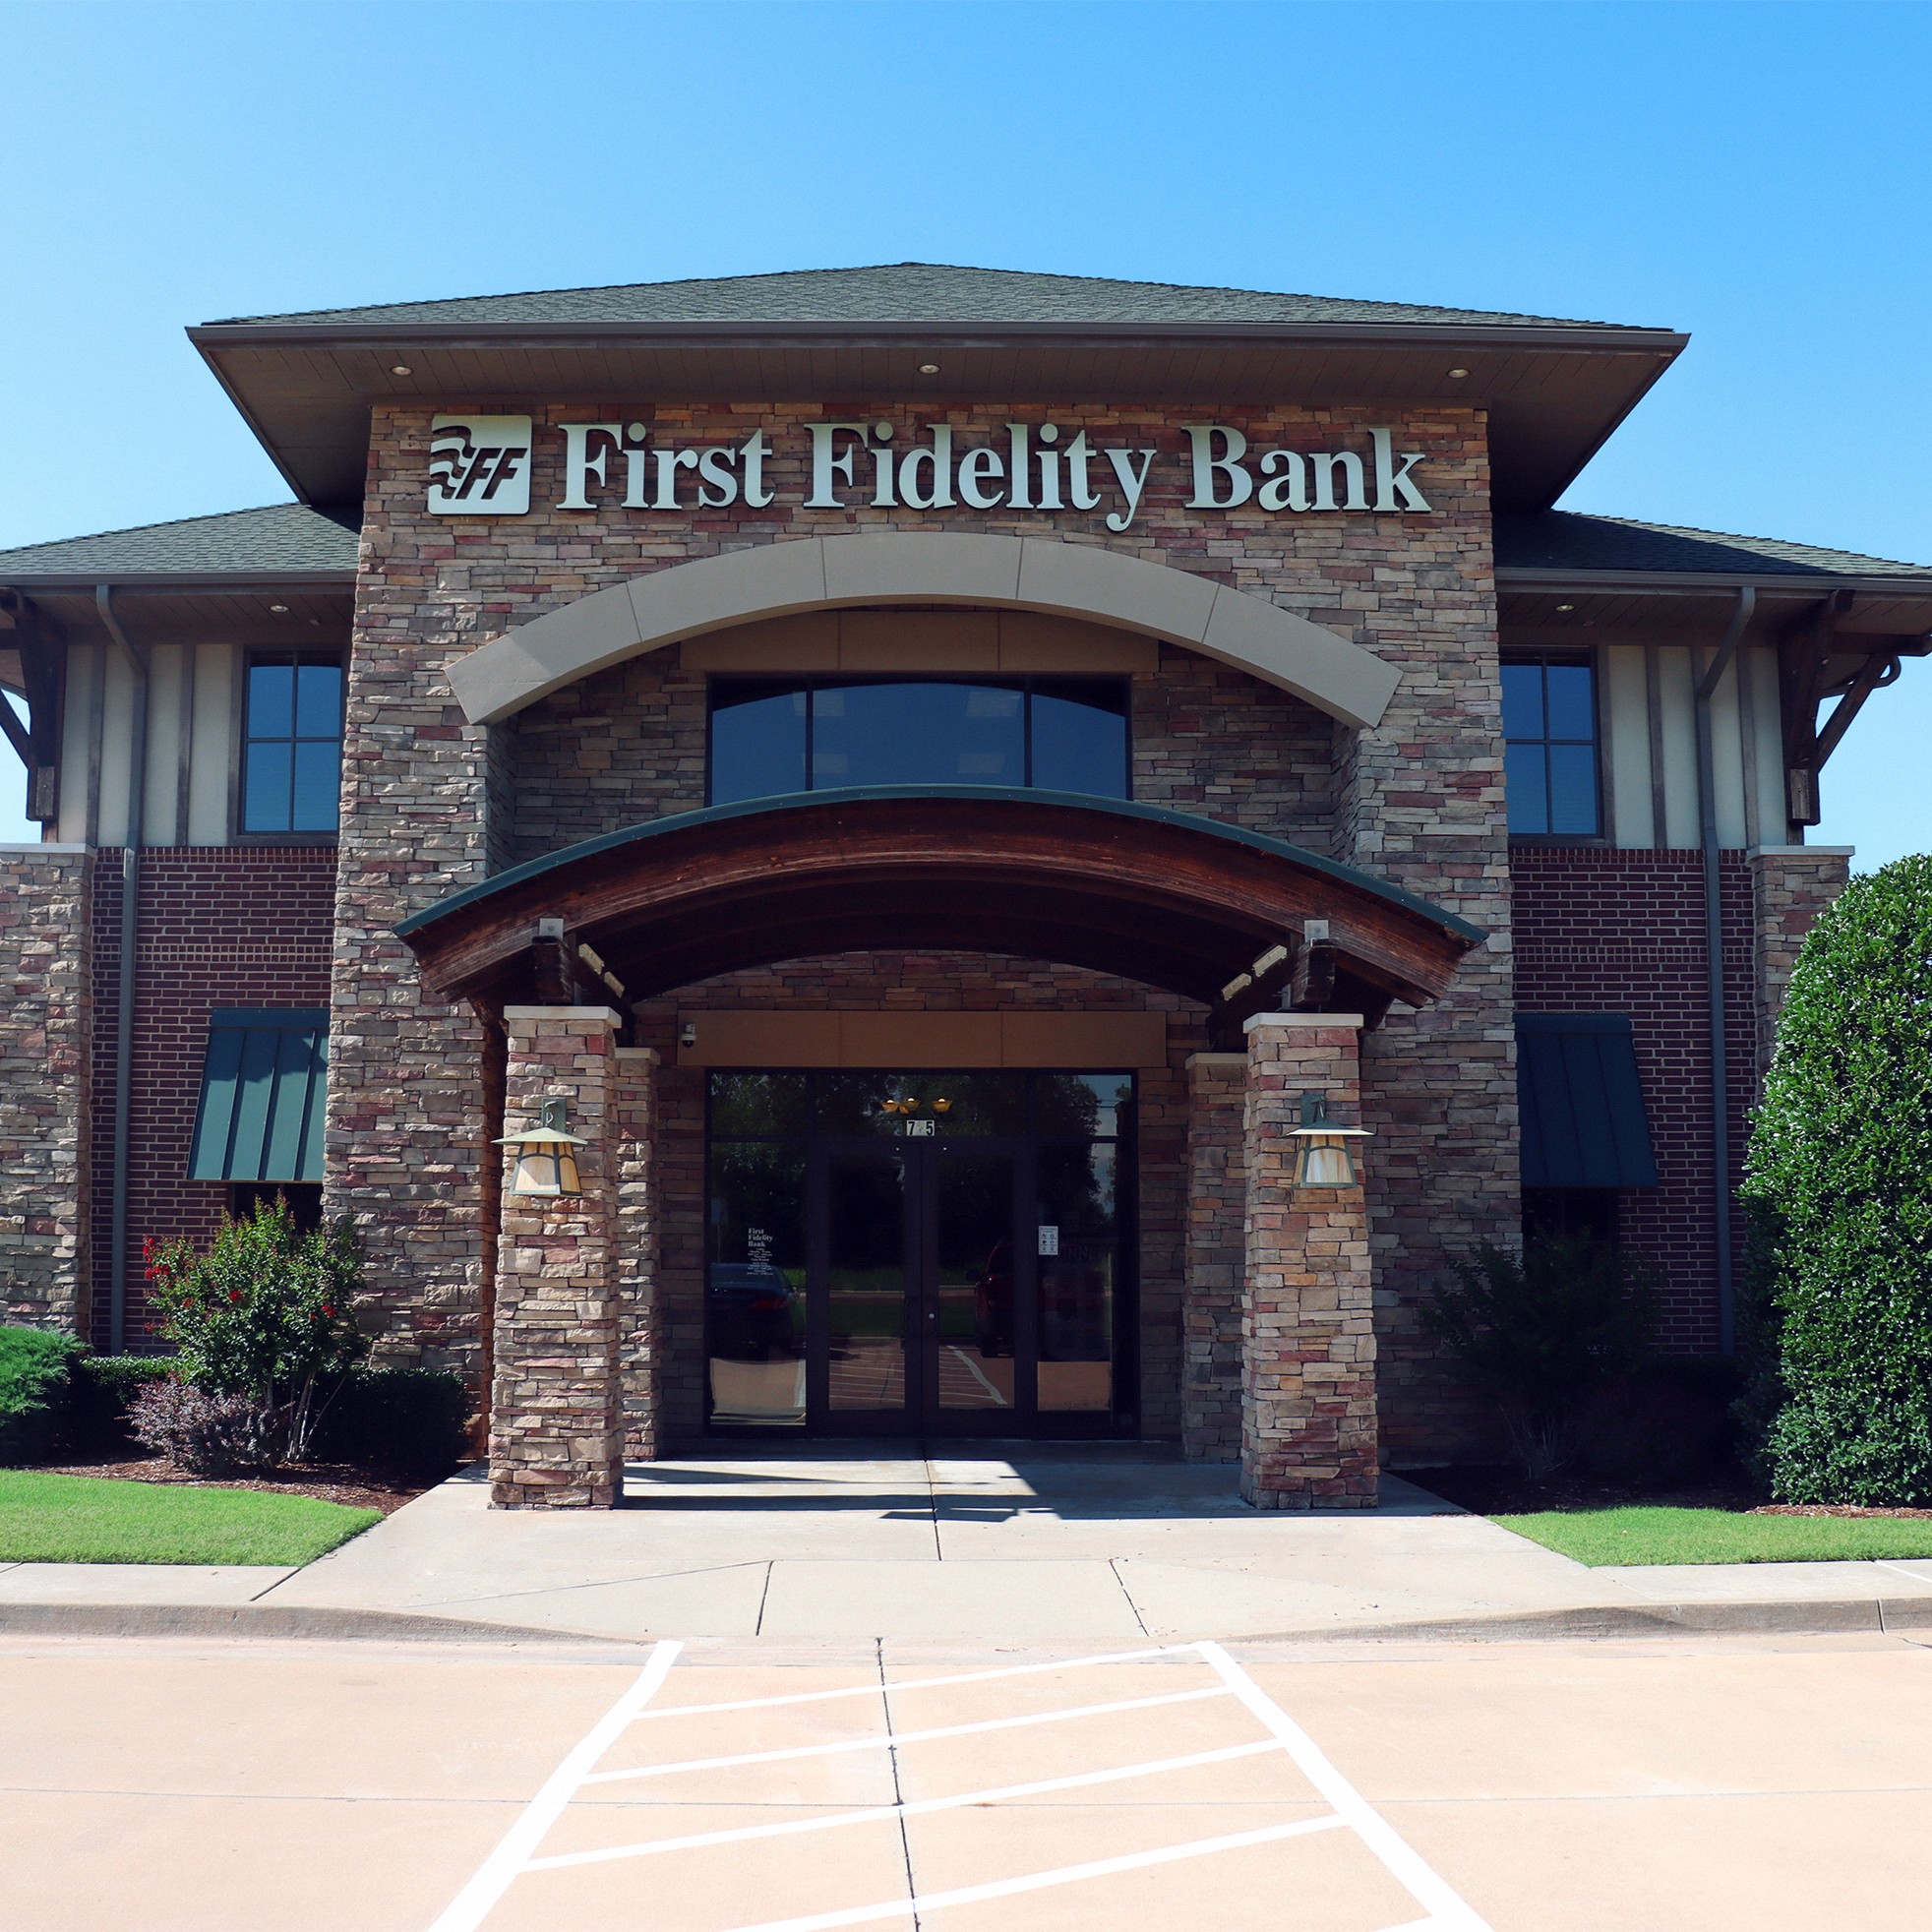 FIDELITY BANK HQ, Financial